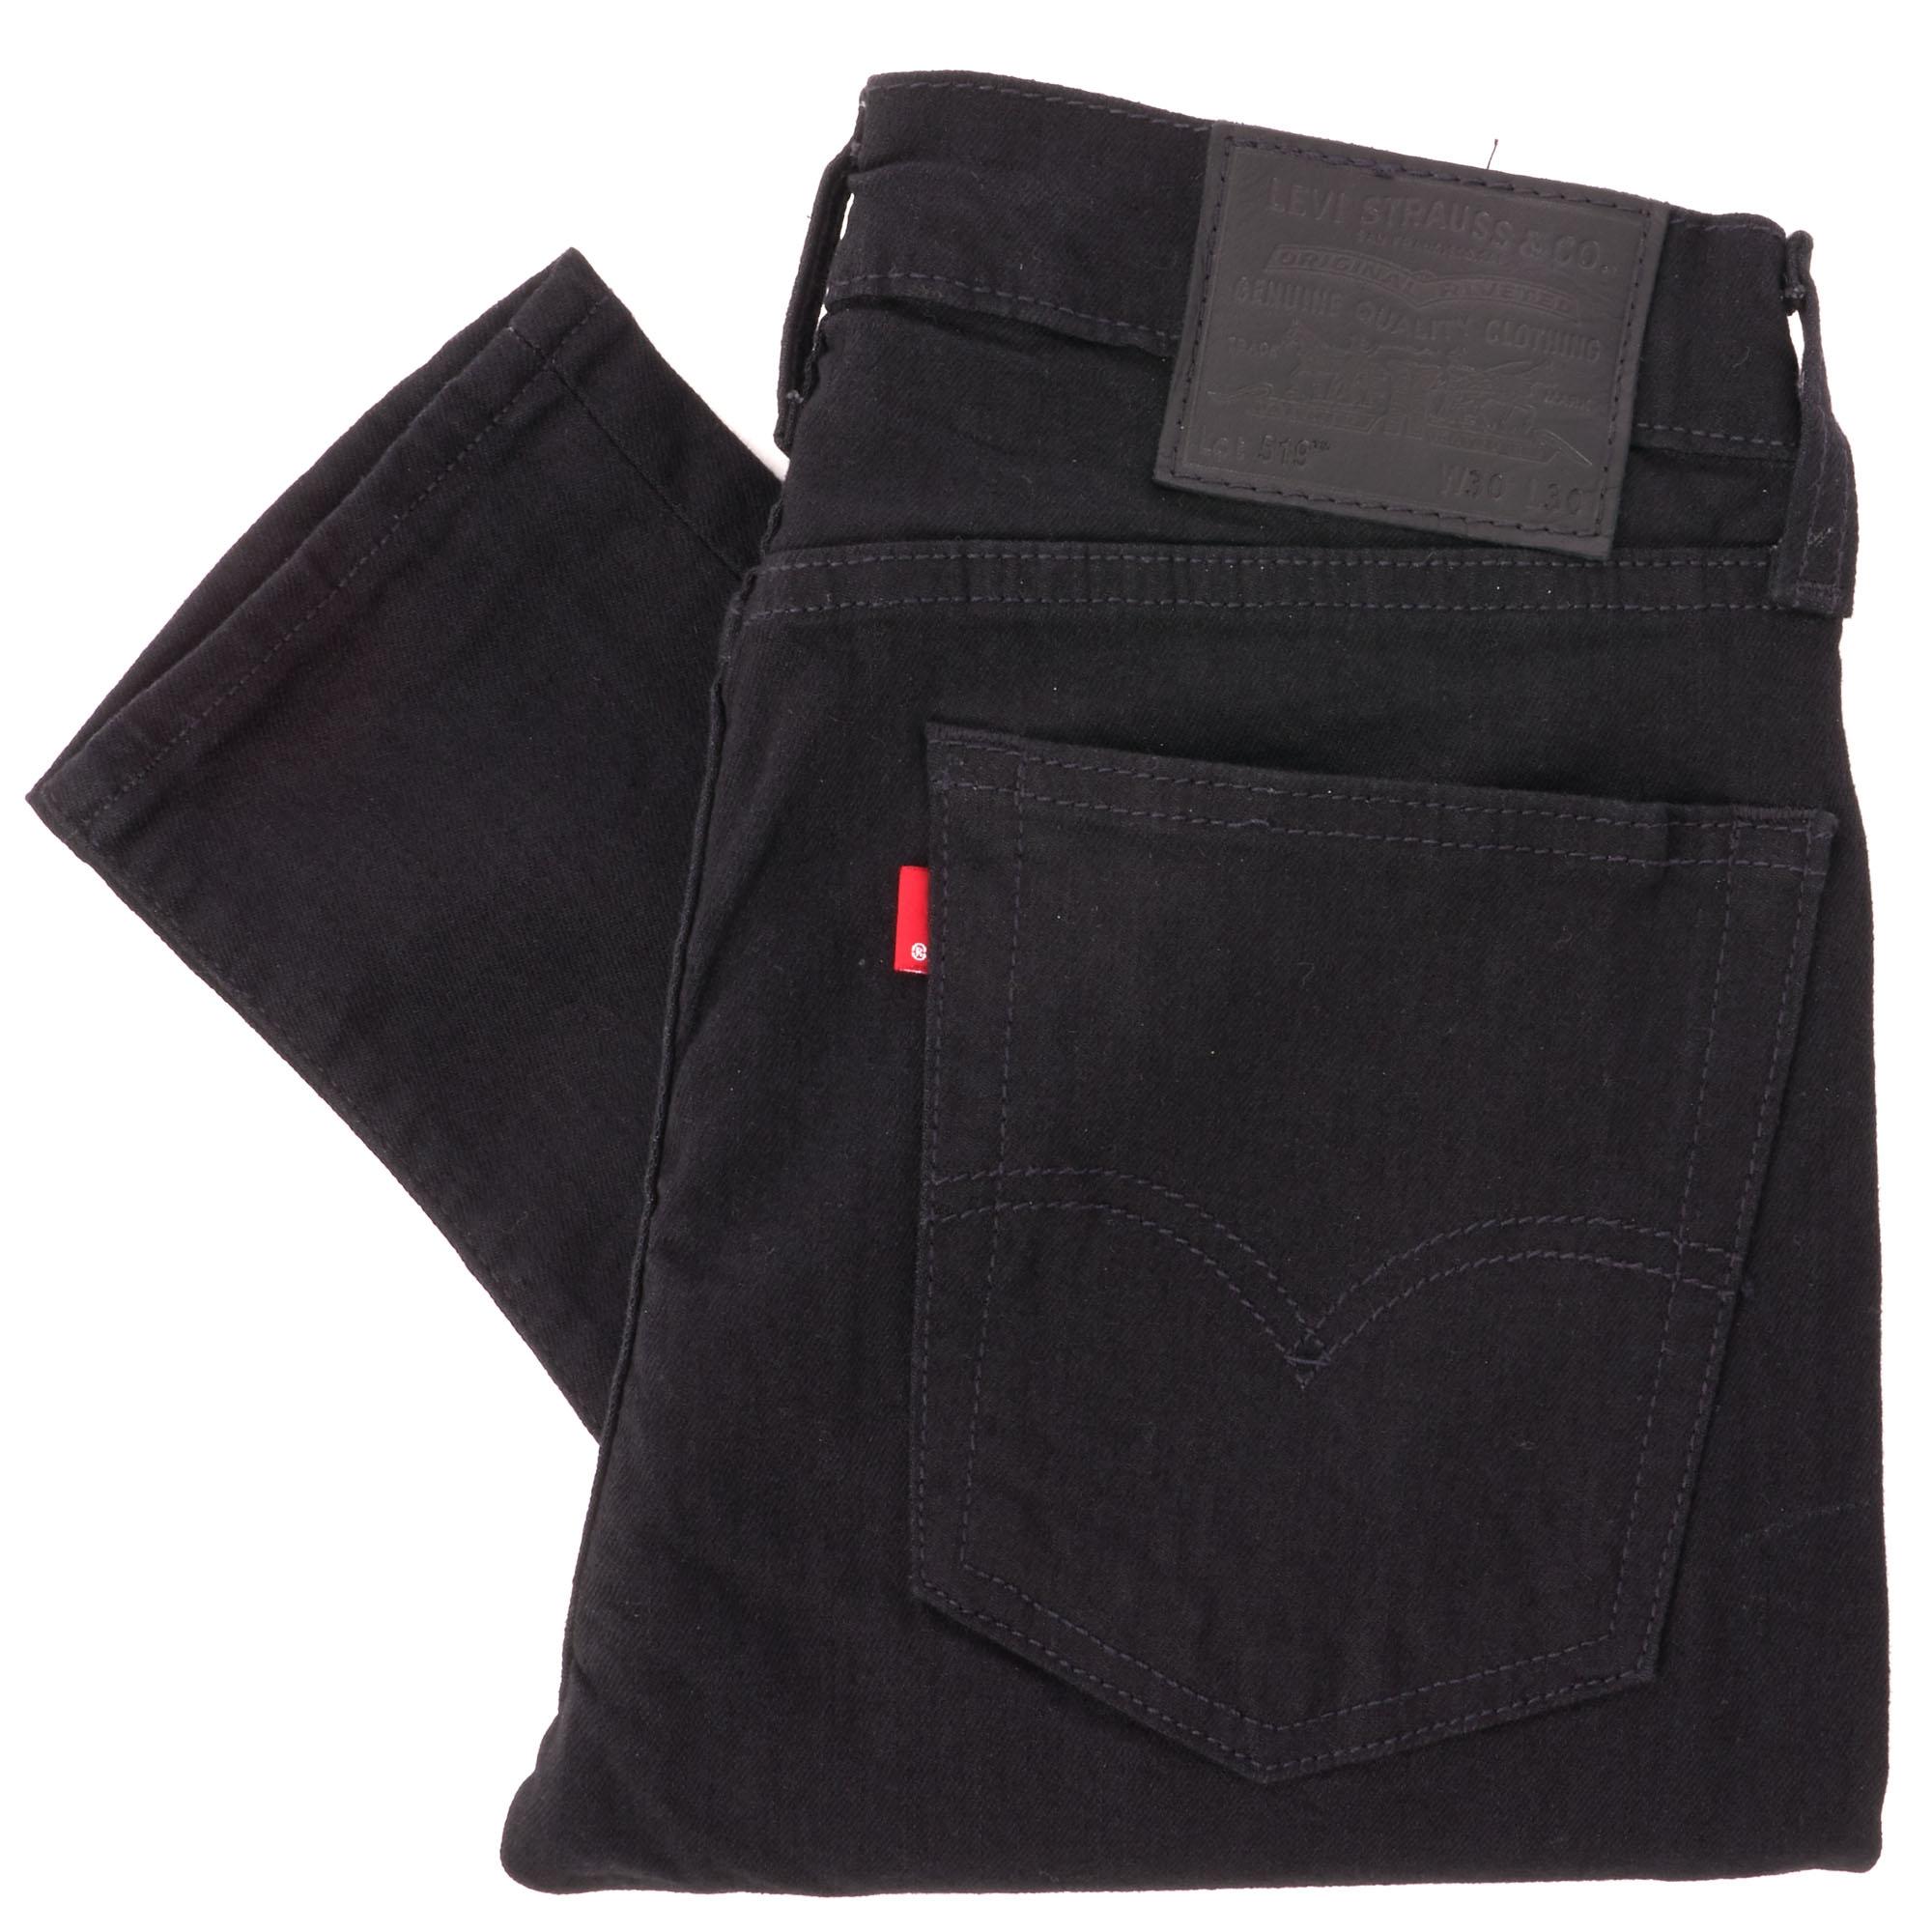 Levi's Denim 519 Extreme Skinny Fit Jeans in Black for Men - Lyst